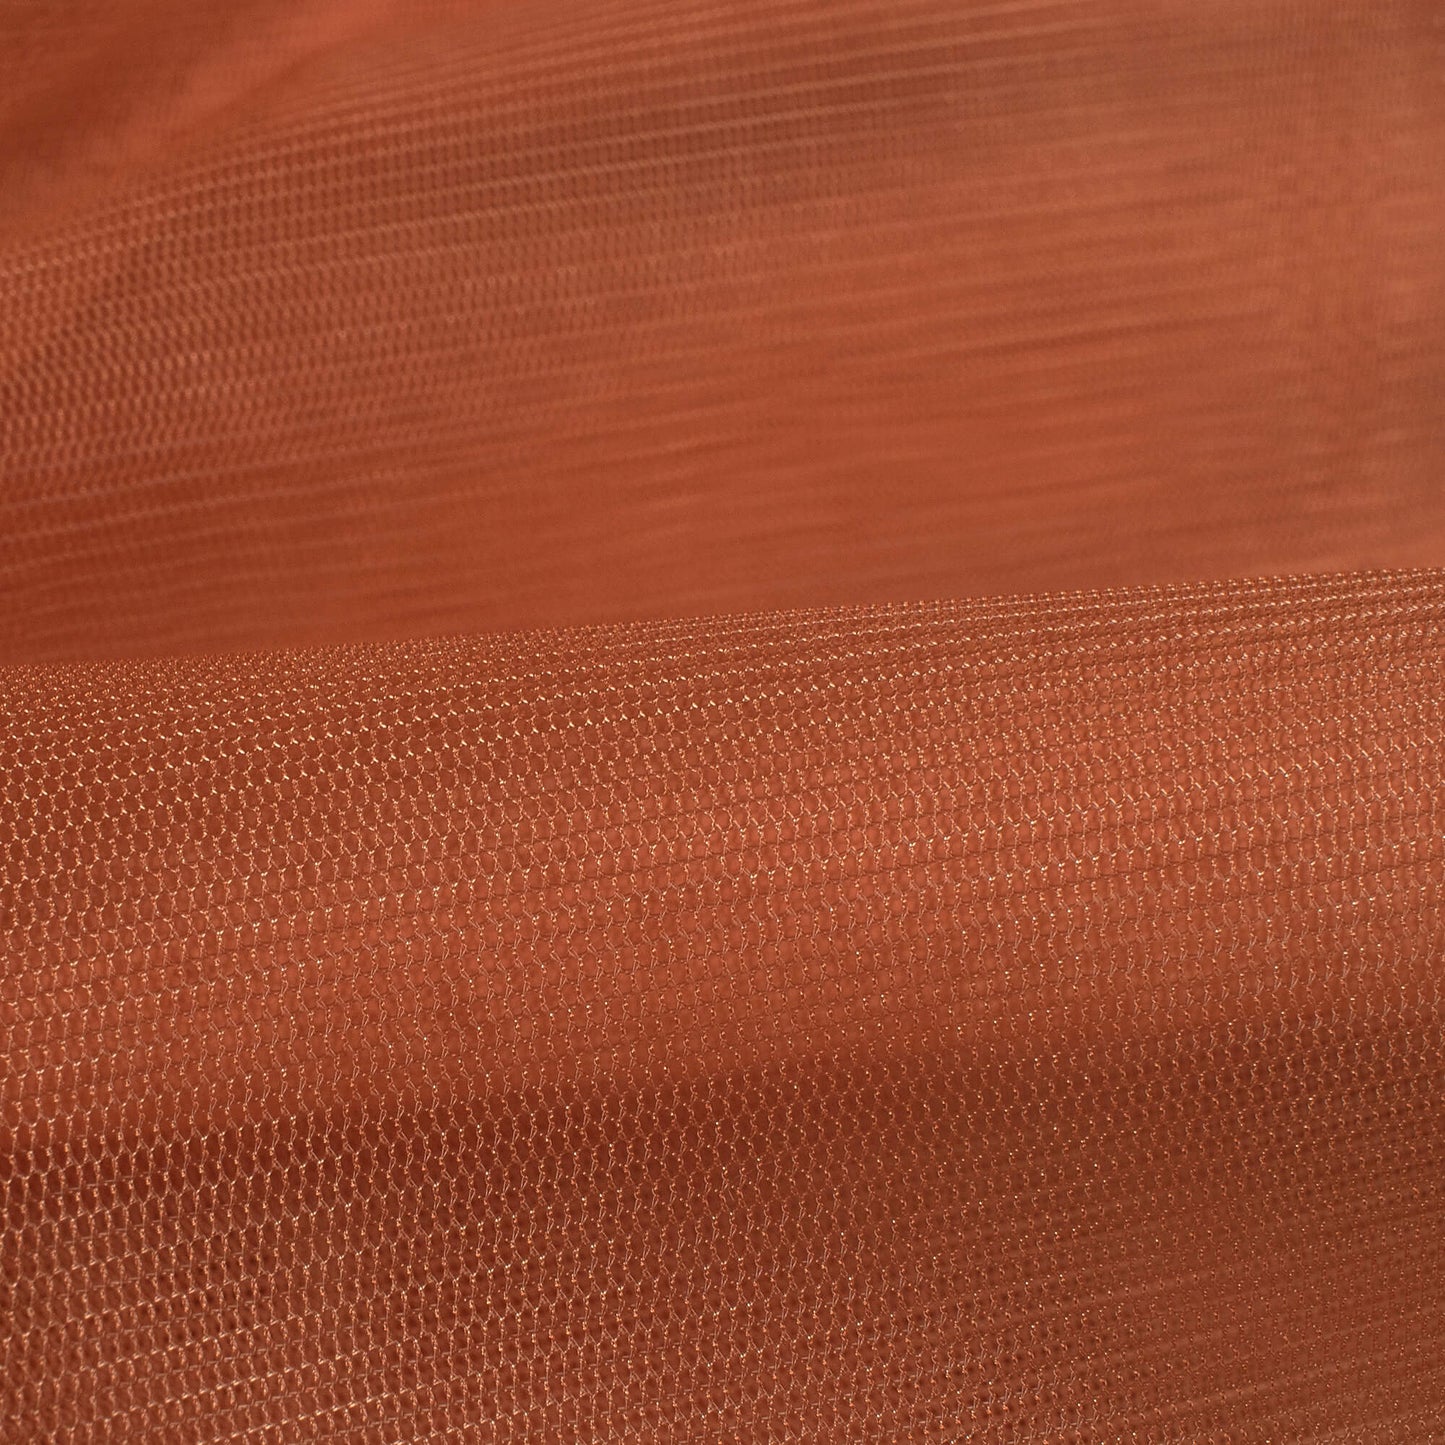 Dark Peach Plain Premium Quality Butterfly Net Fabric